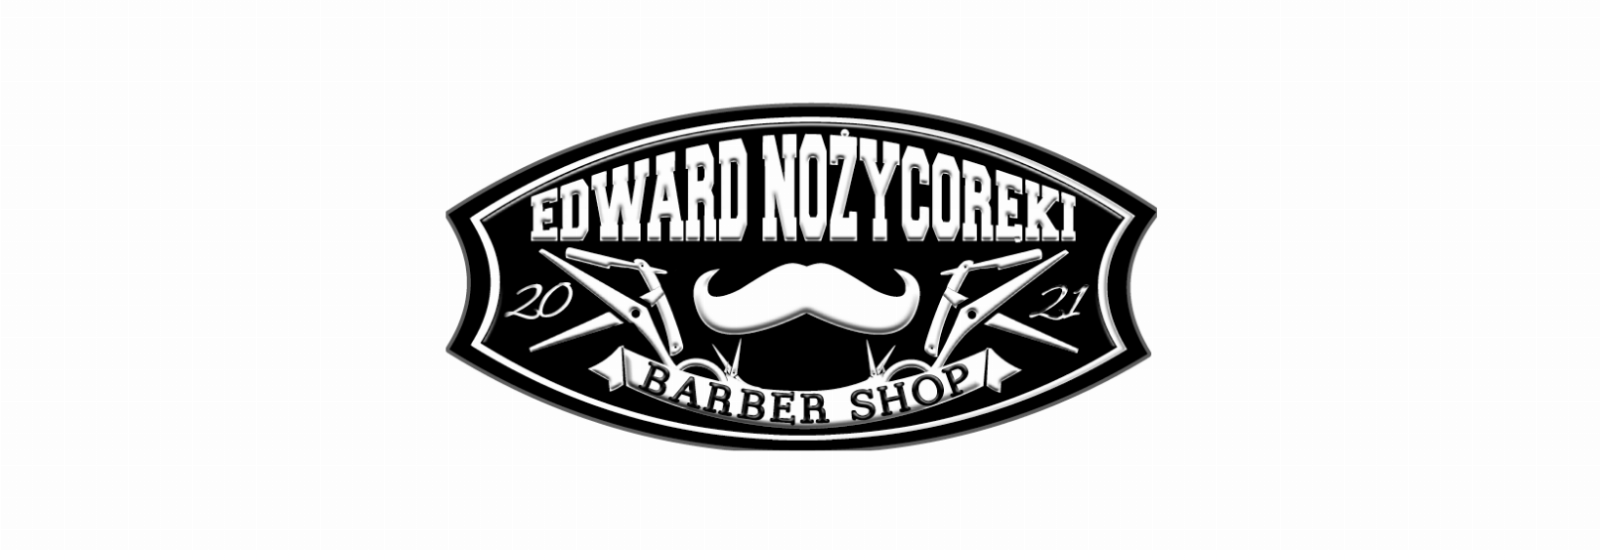 Edward Nożycoręki Barber Shop